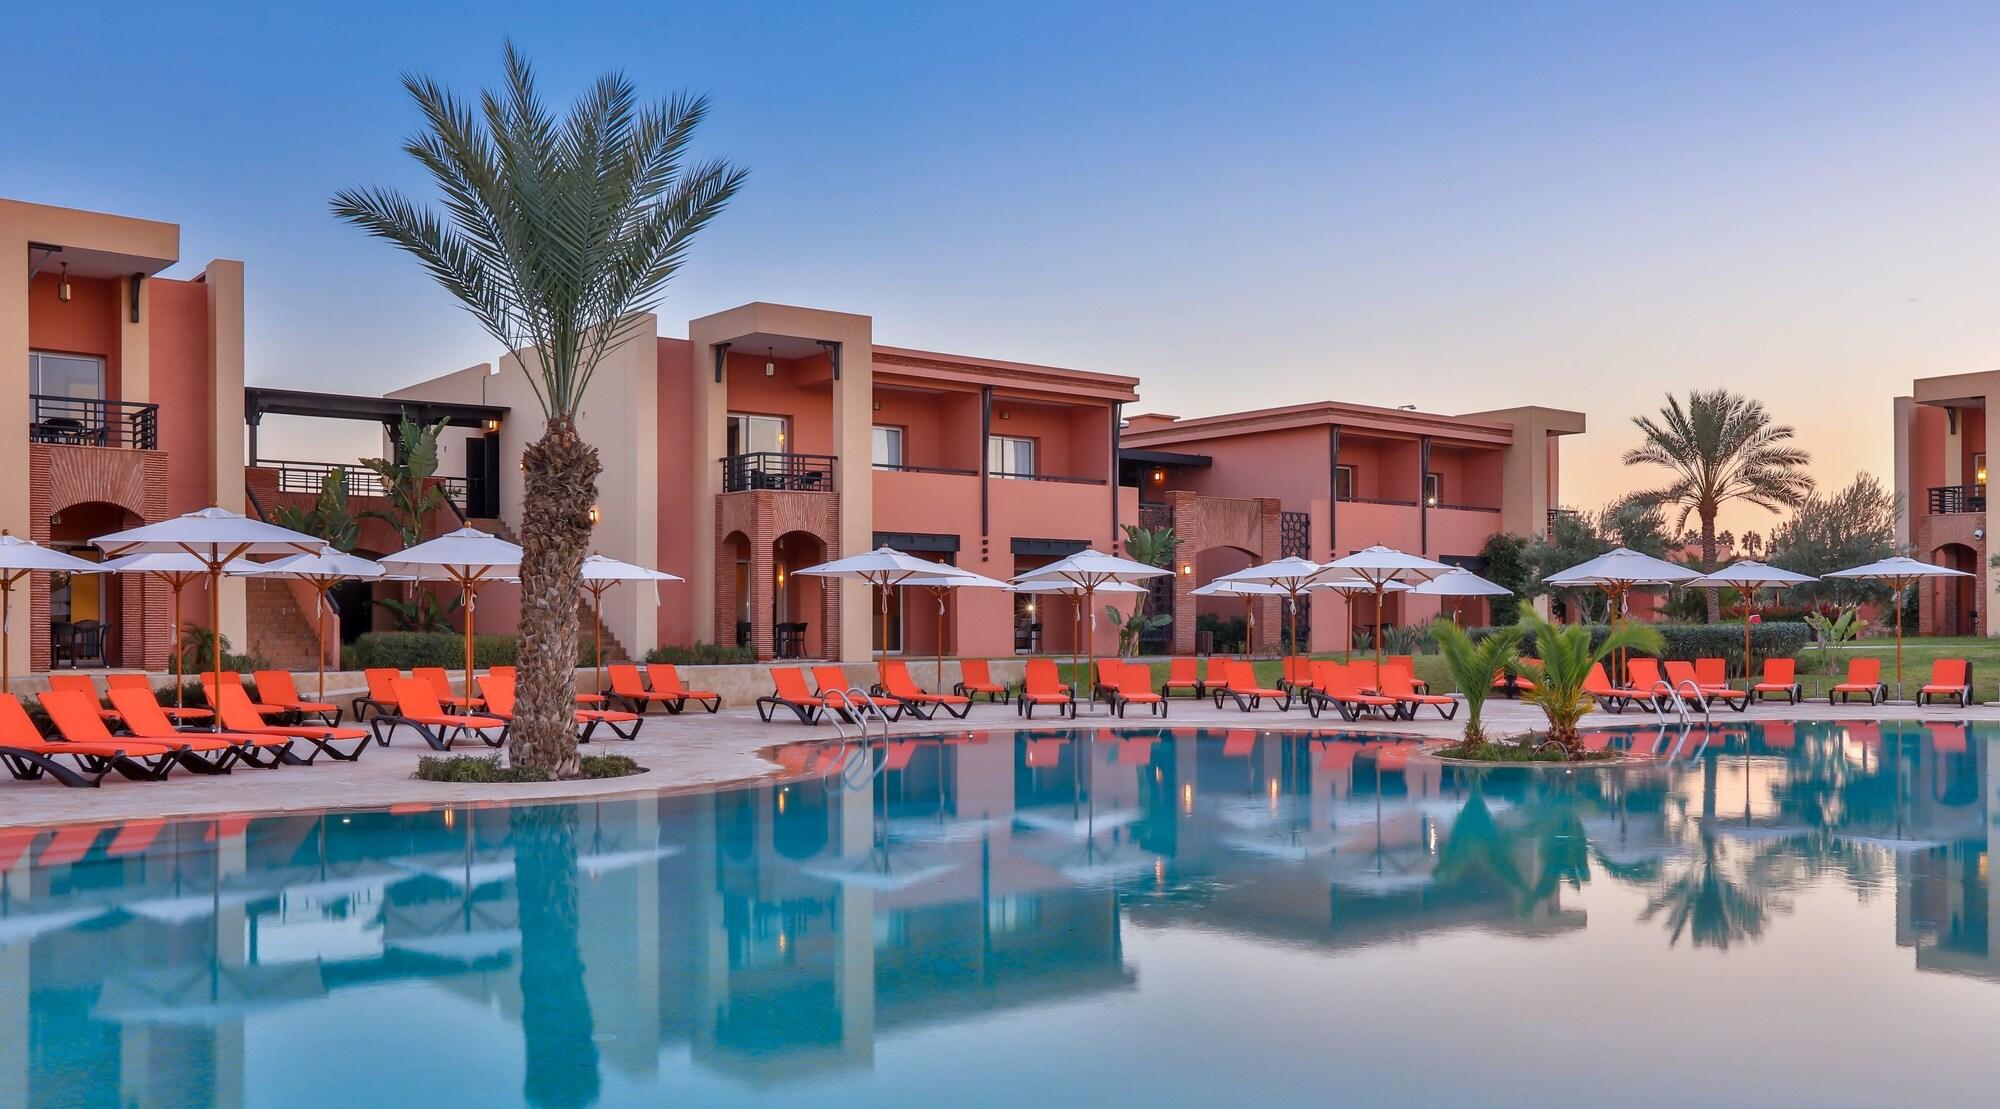 Zephyr Marrakech - Hôtel, Centre de Vacances, Resort & SPA image